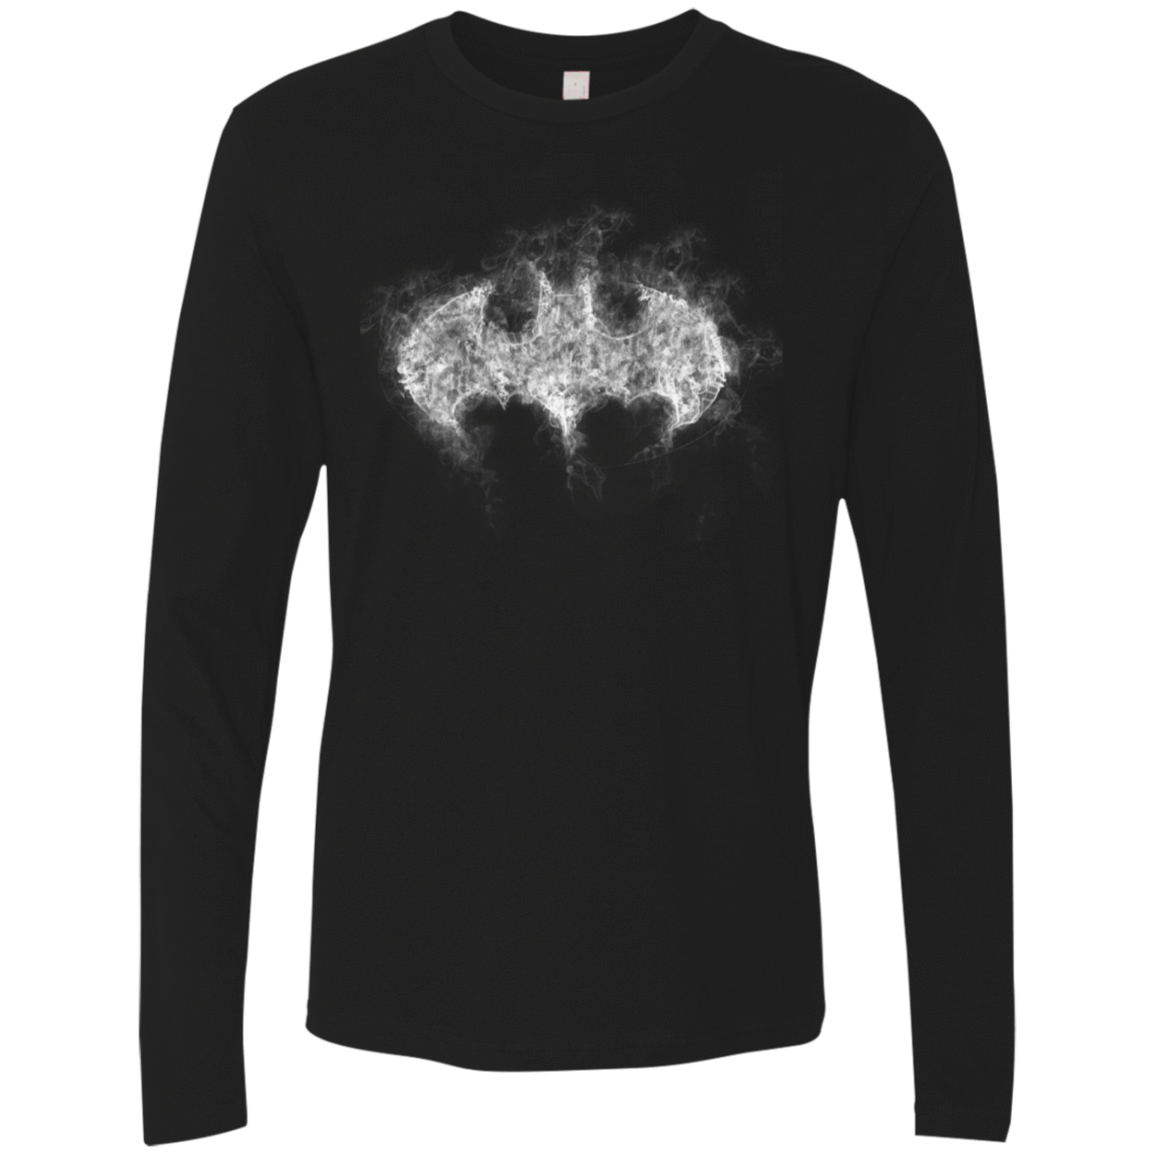 T-Shirts Black / S Bat Smoke Men's Premium Long Sleeve